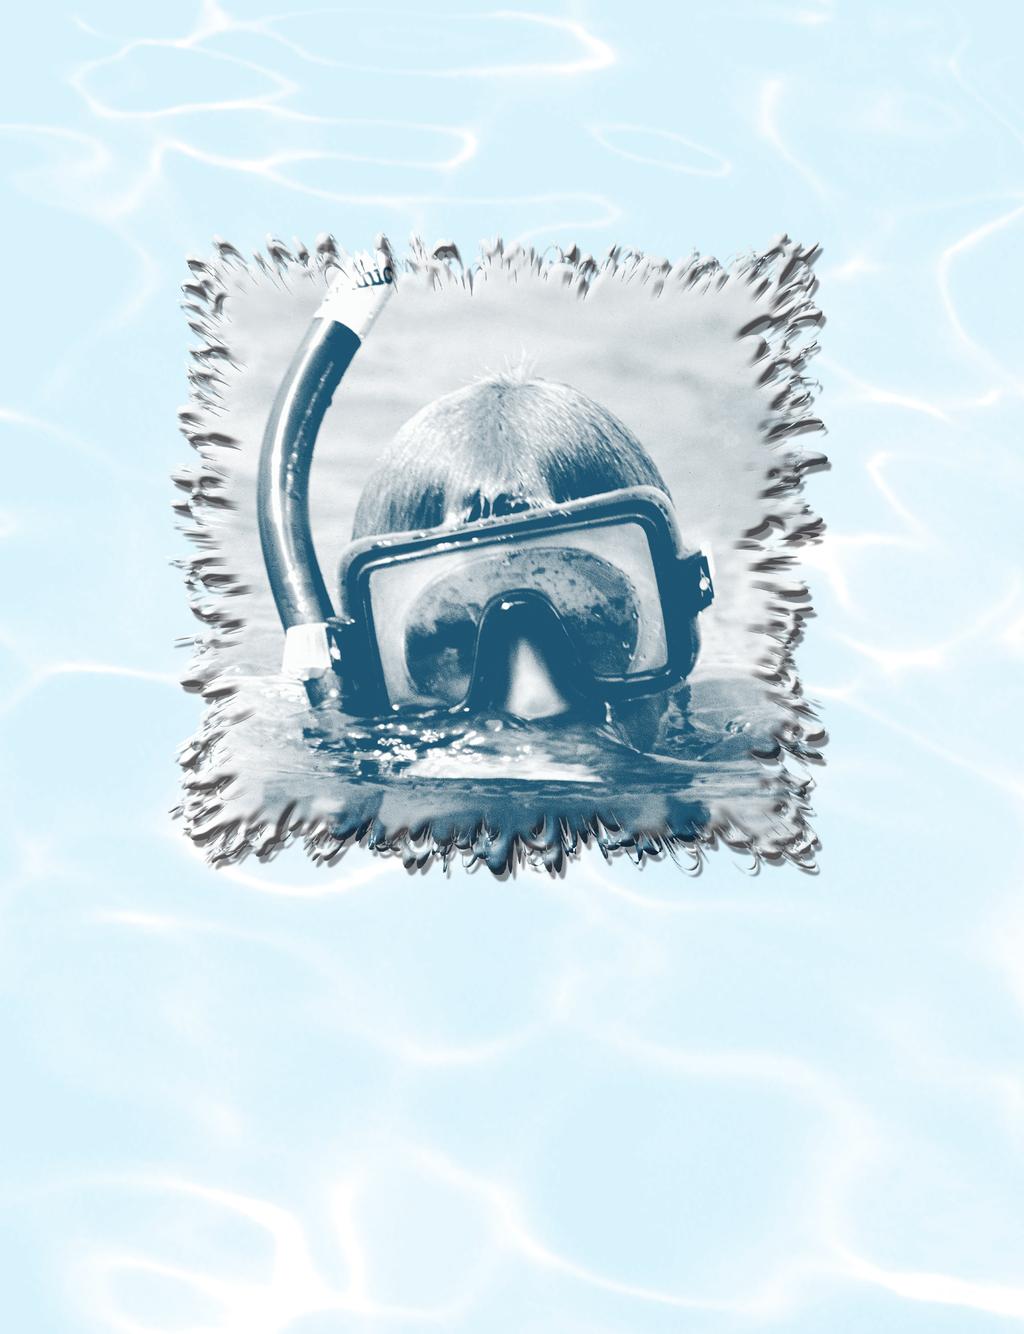 BSA Snorkeling Safety